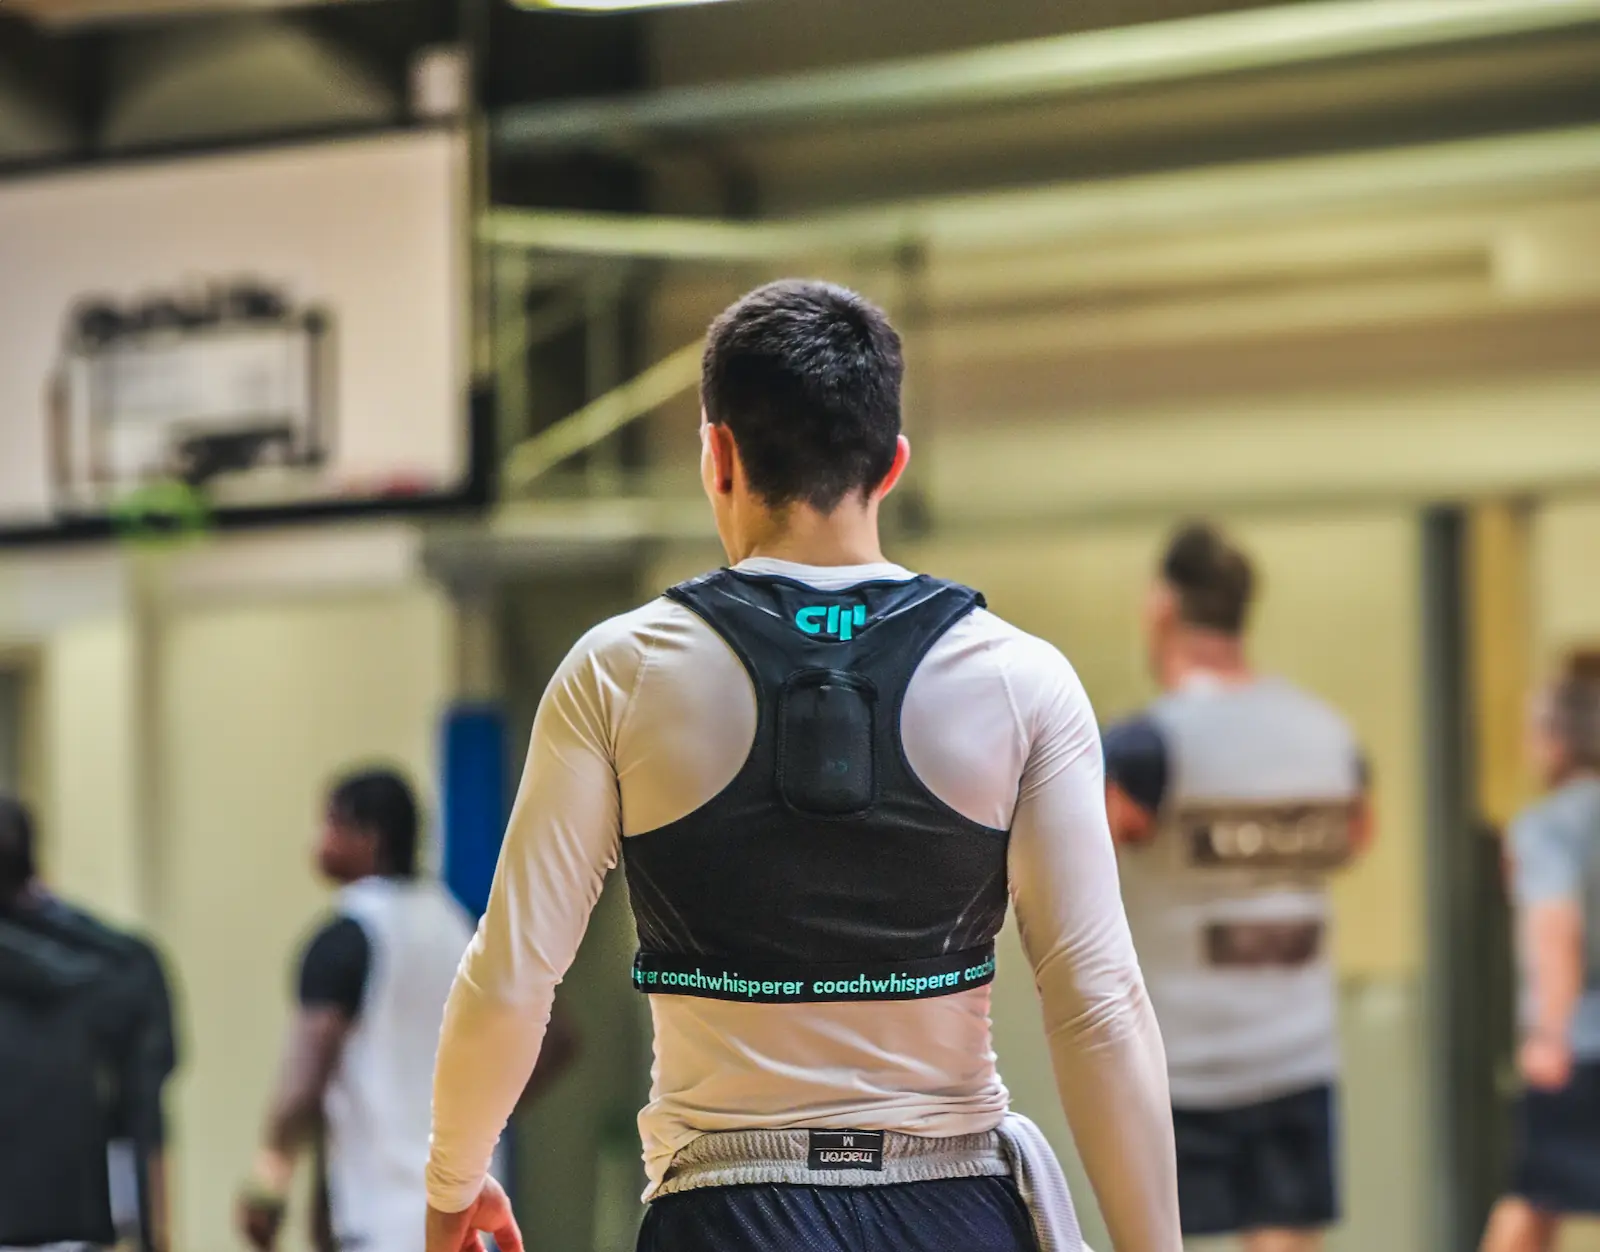 Basketball player wearing a Coachwhisperer vest (Soundstar)